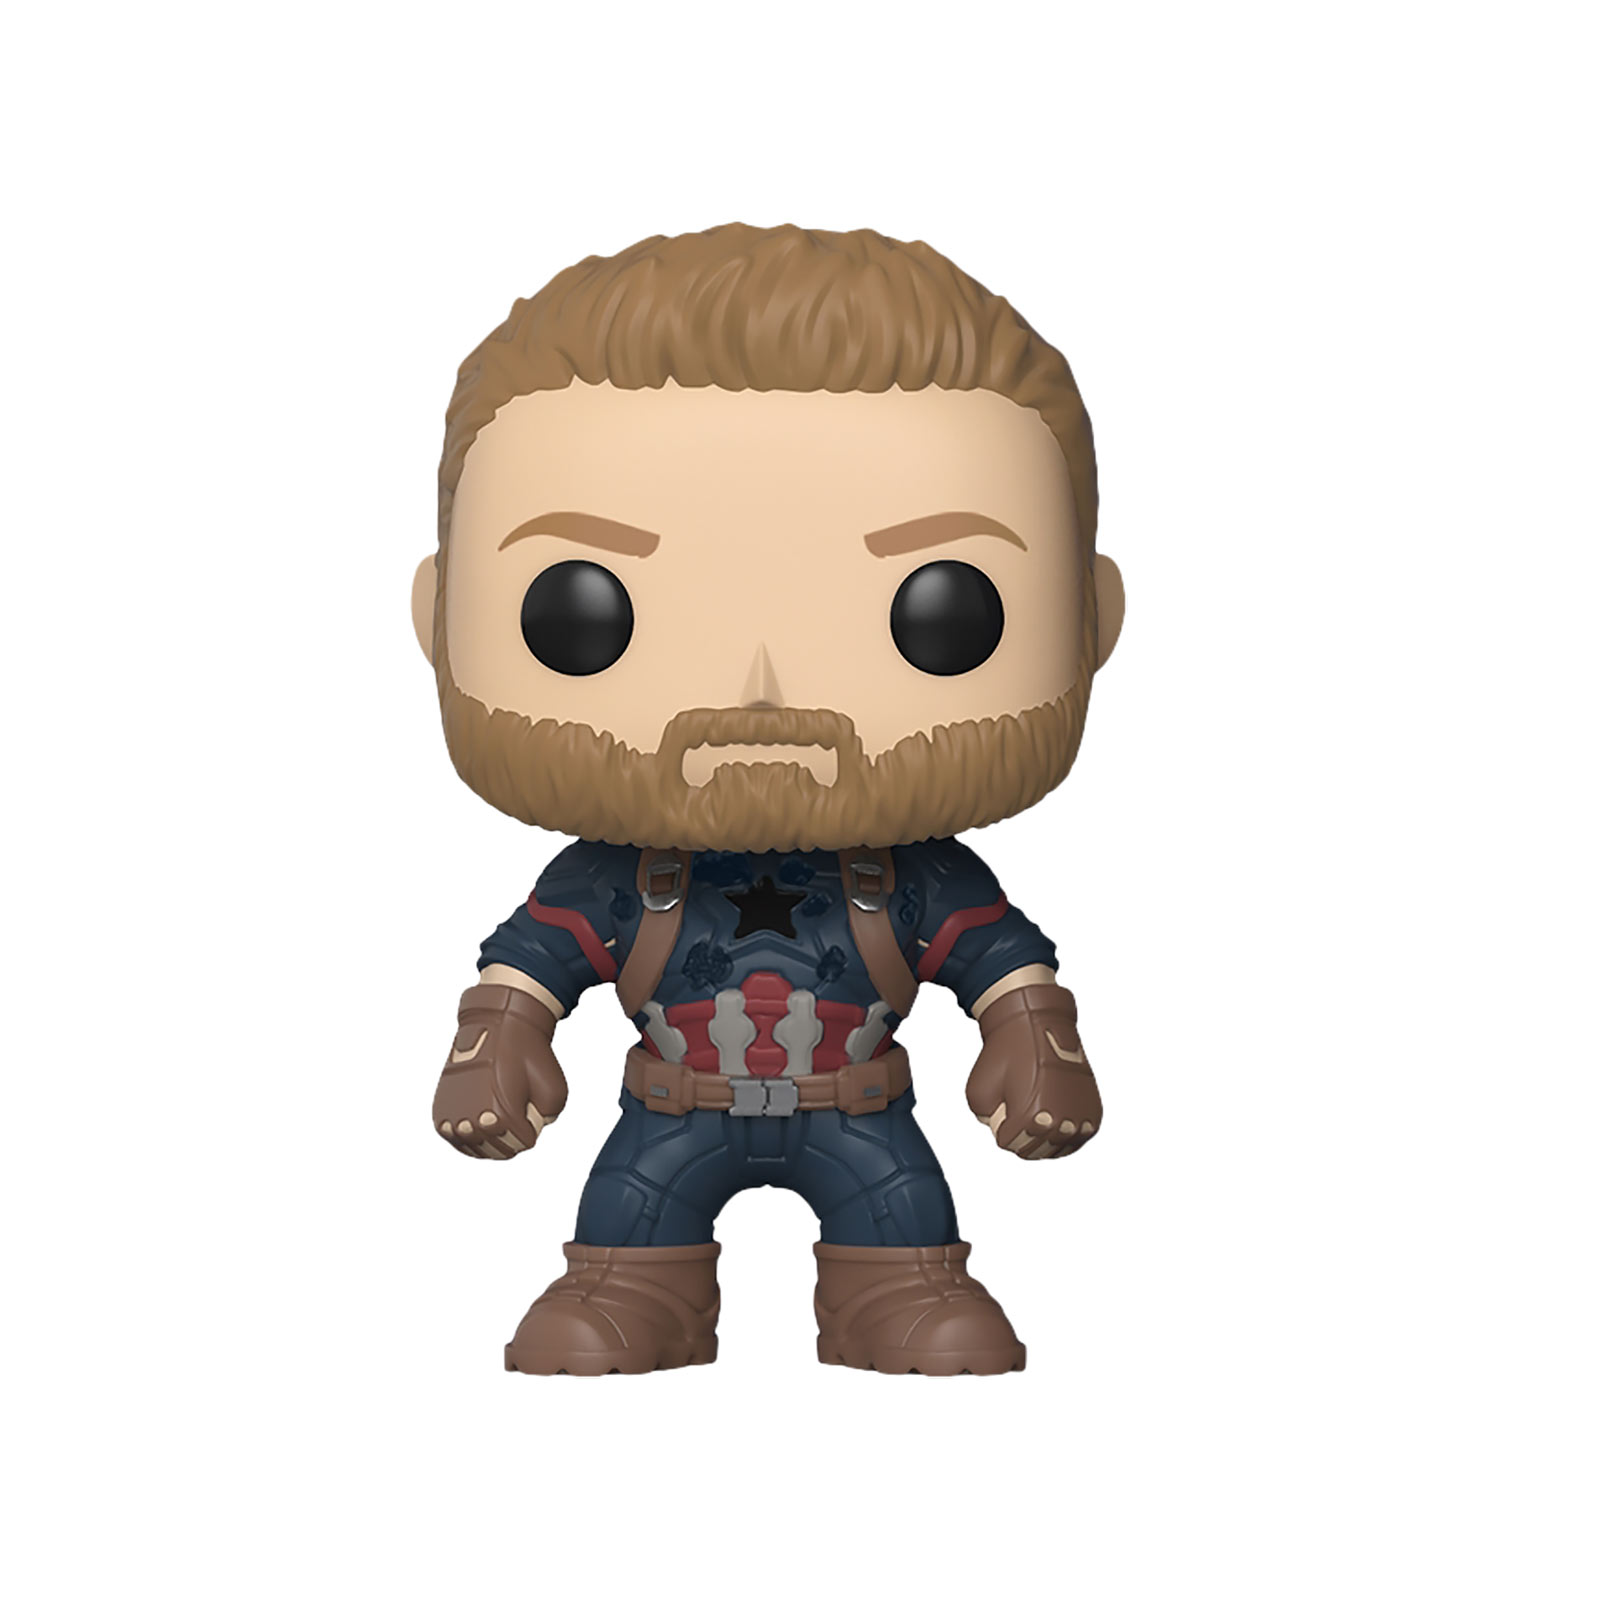 Avengers - Captain America Infinity War Funko Pop Bobblehead Figure